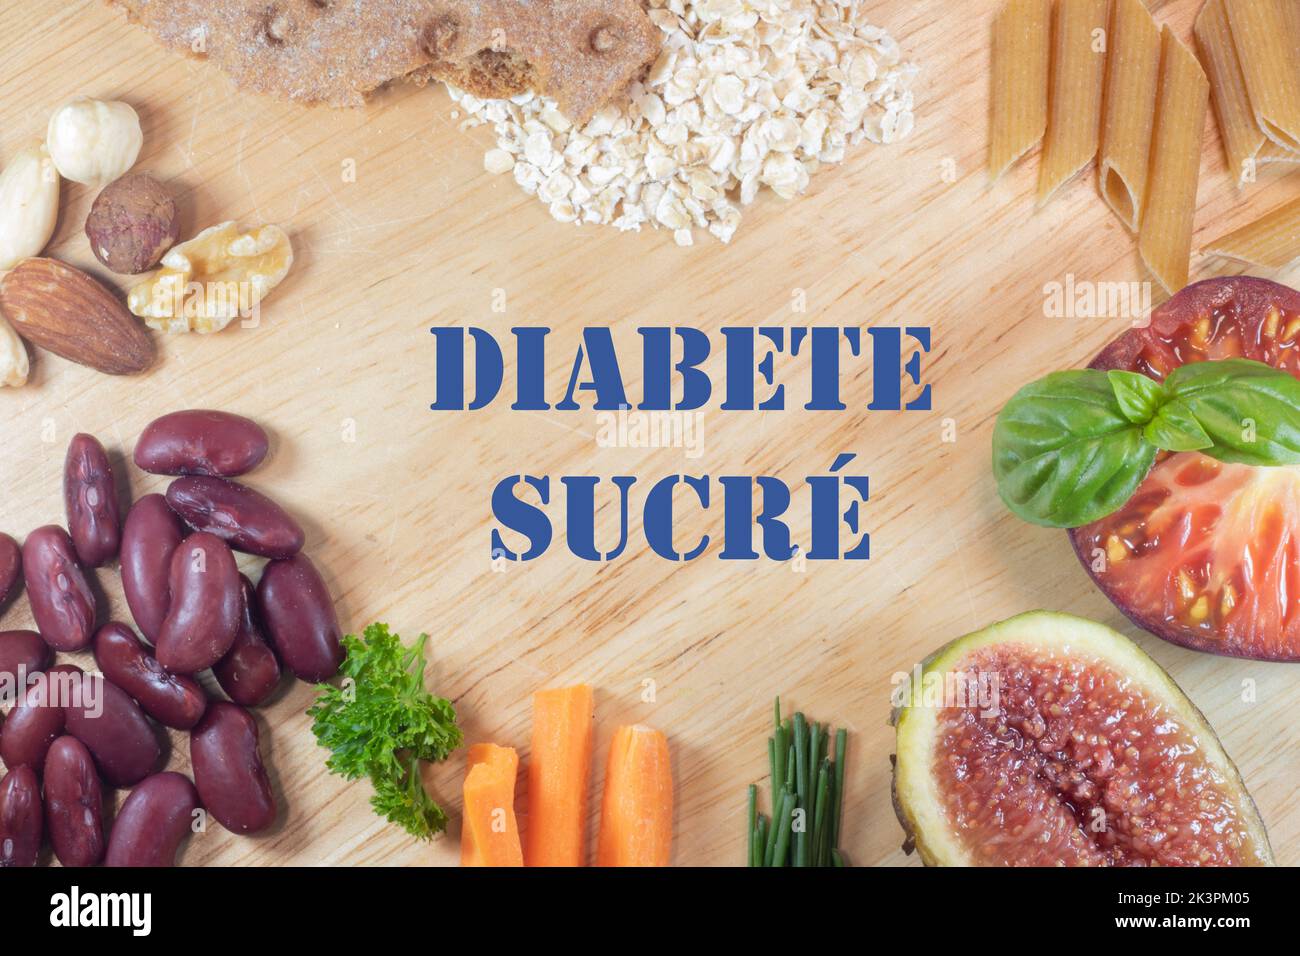 diabetes mellitus with low sugar, high fiber, protein foods Stock Photo